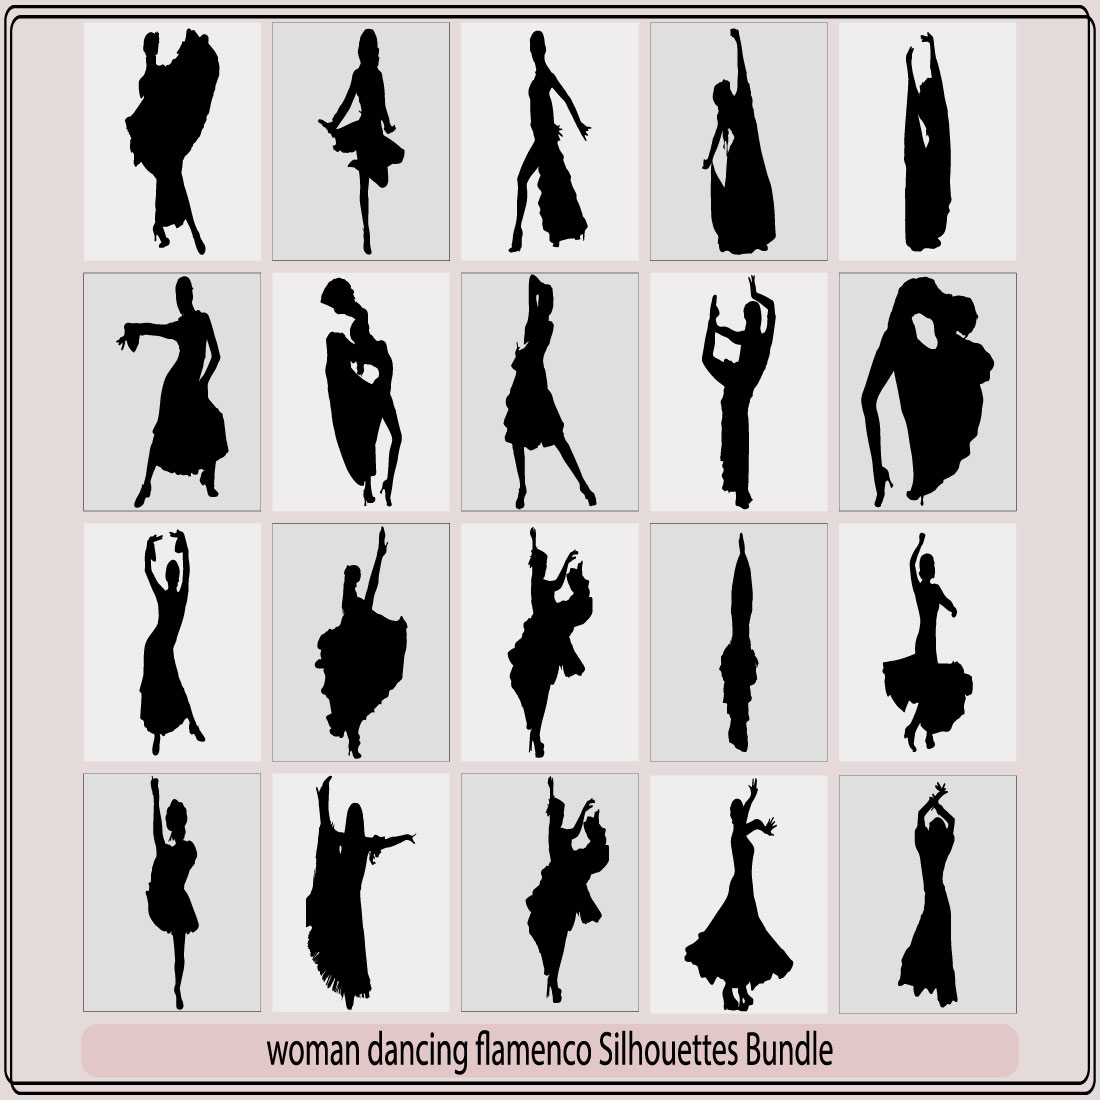 Women dancing flamenco and salsa vector silhouettes set,Vector silhouette flamenco dancer preview image.